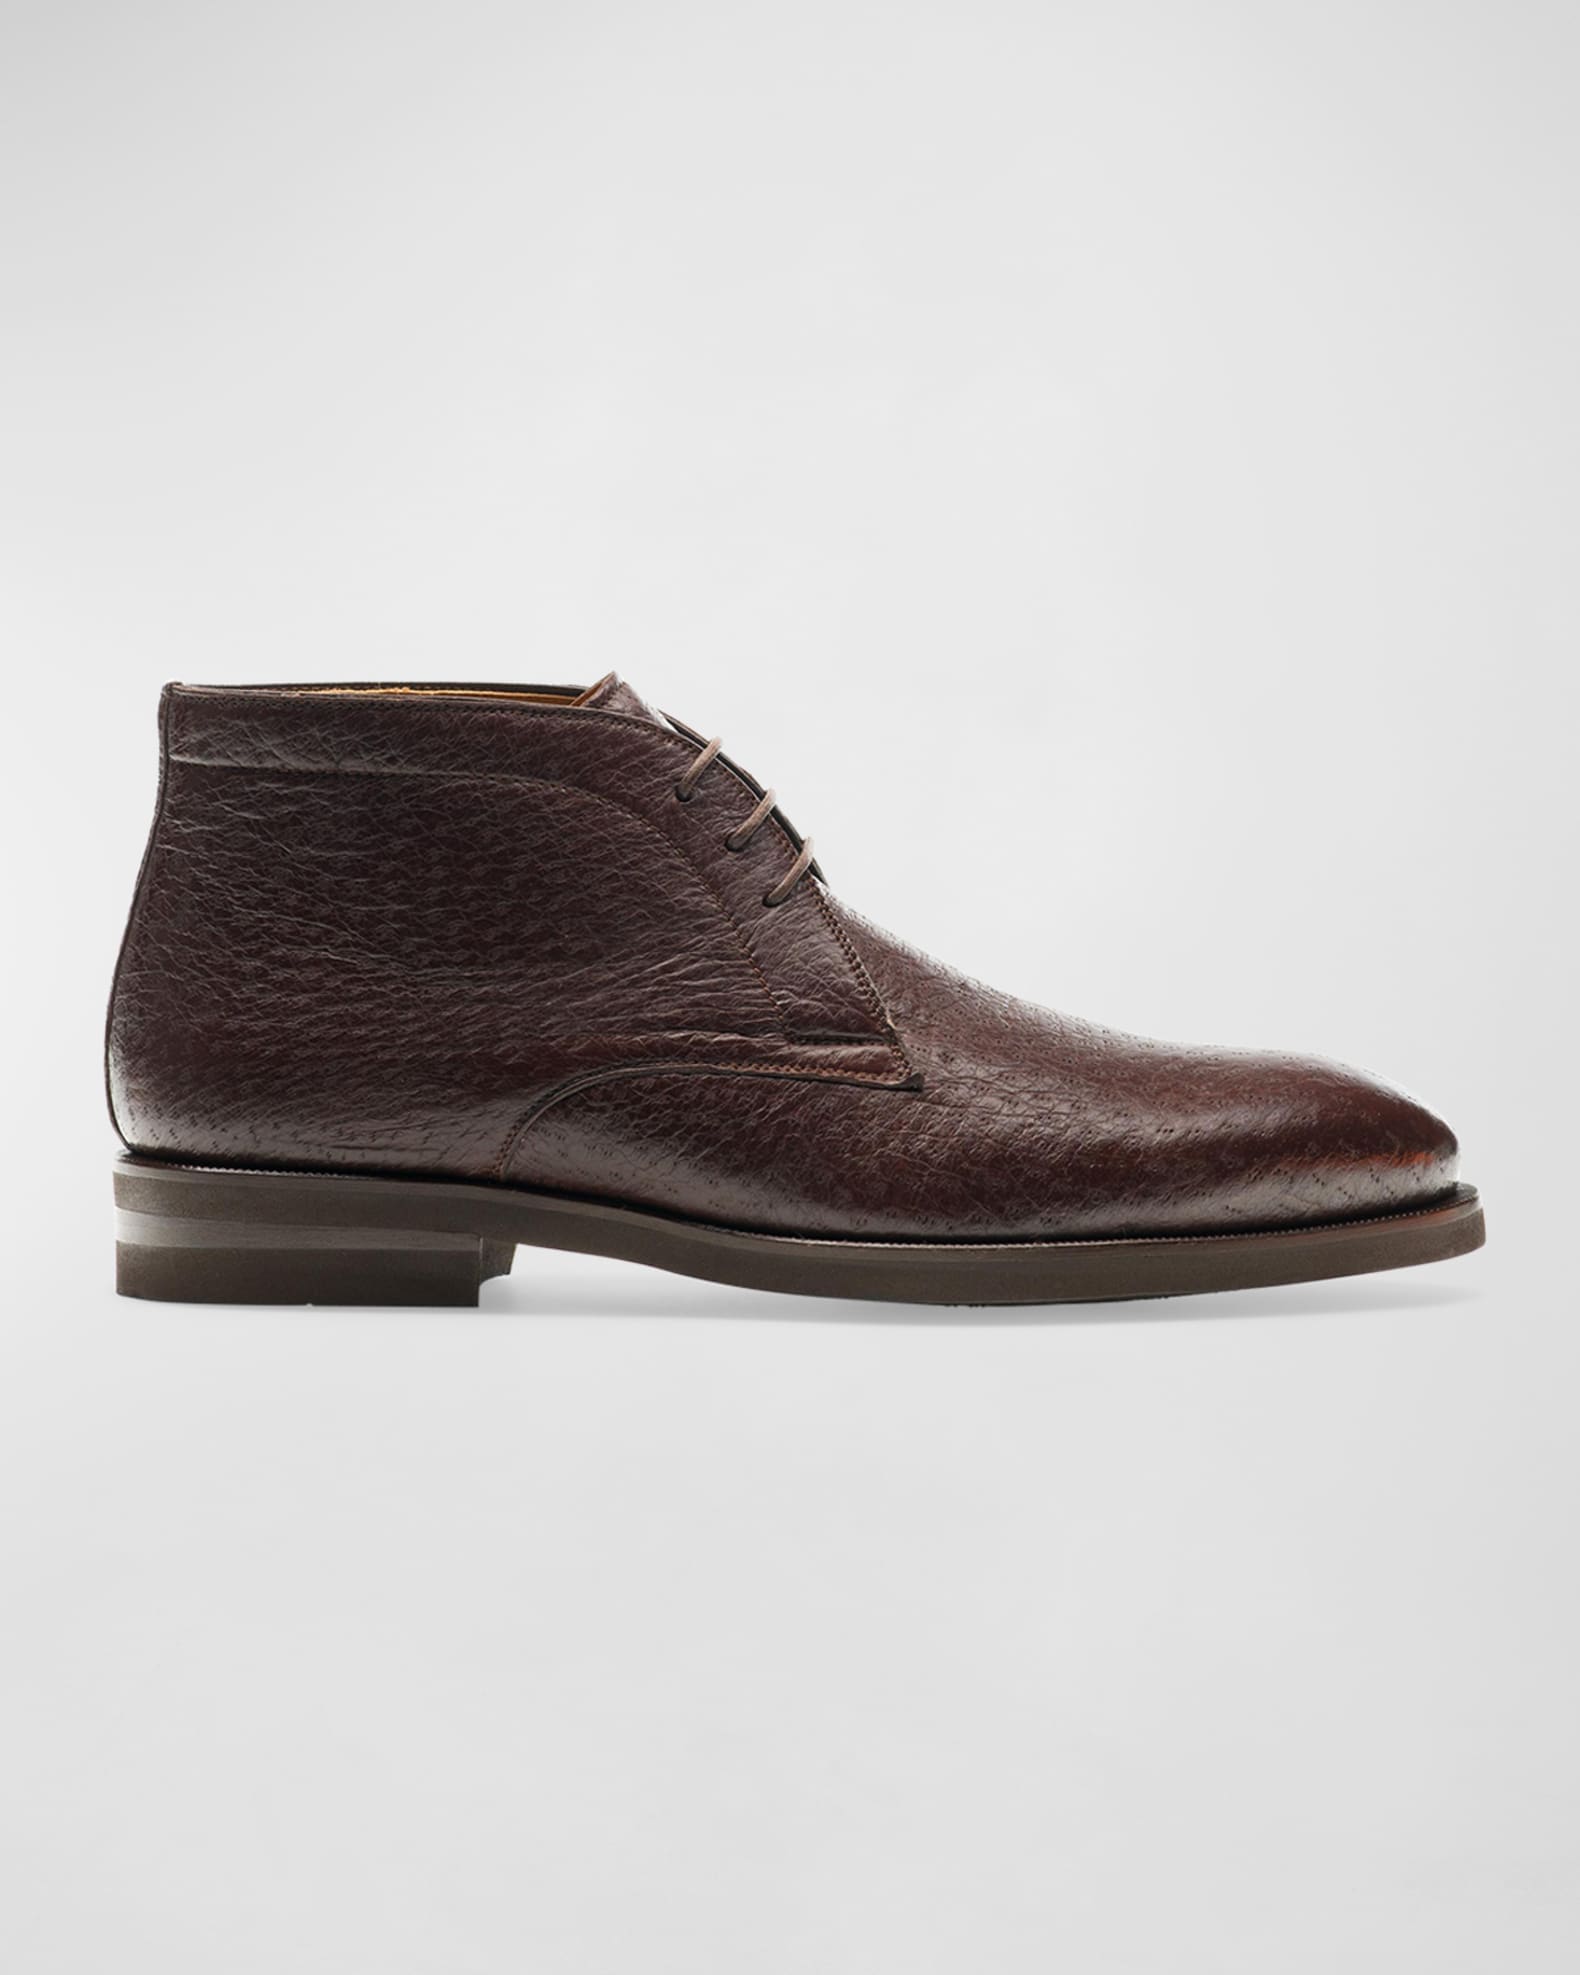 Magnanni Men's Tacna Peccary Leather Chukka Boots | Neiman Marcus